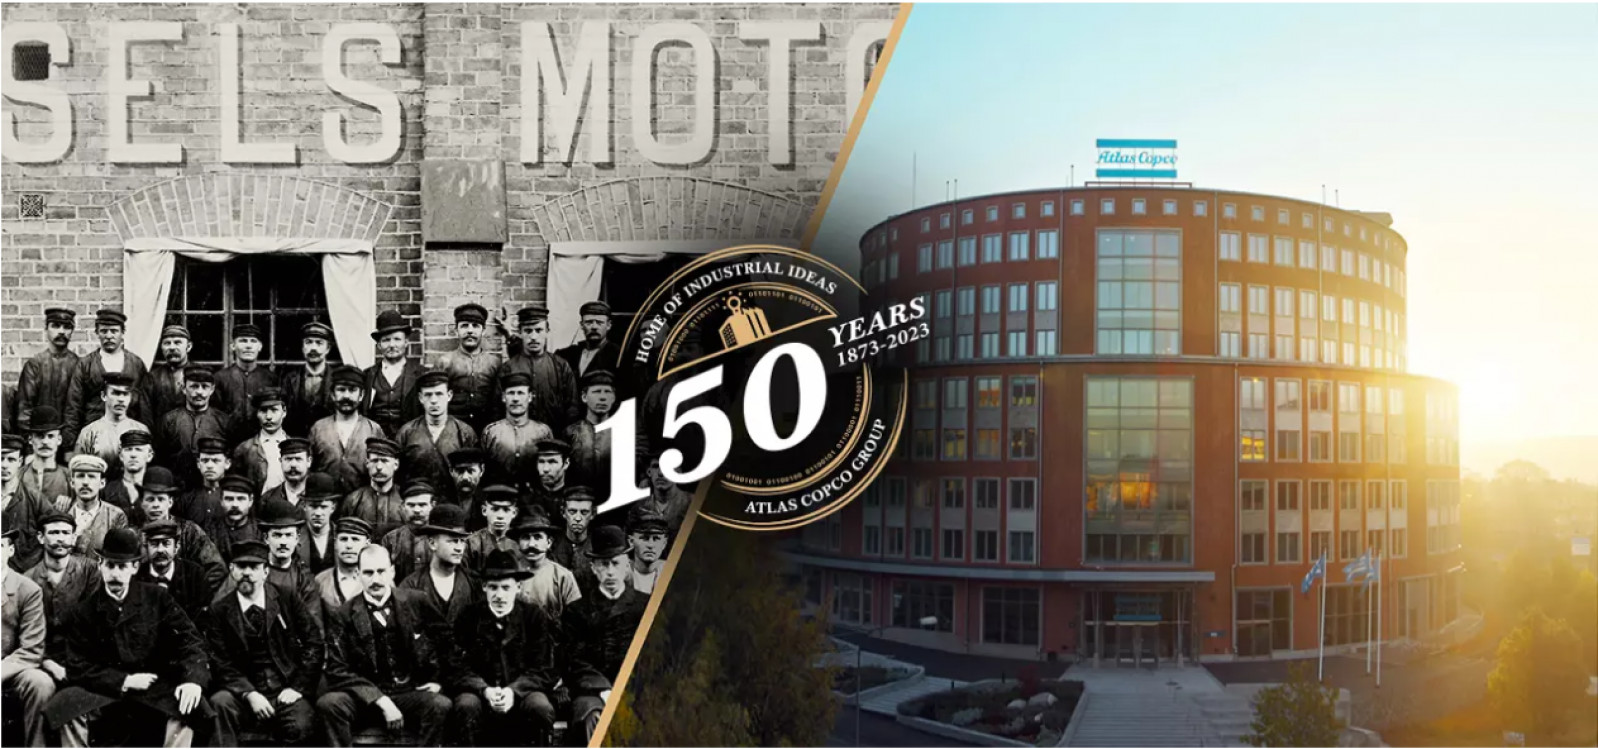 Atlas Copco celebrates 150 years of innovation!